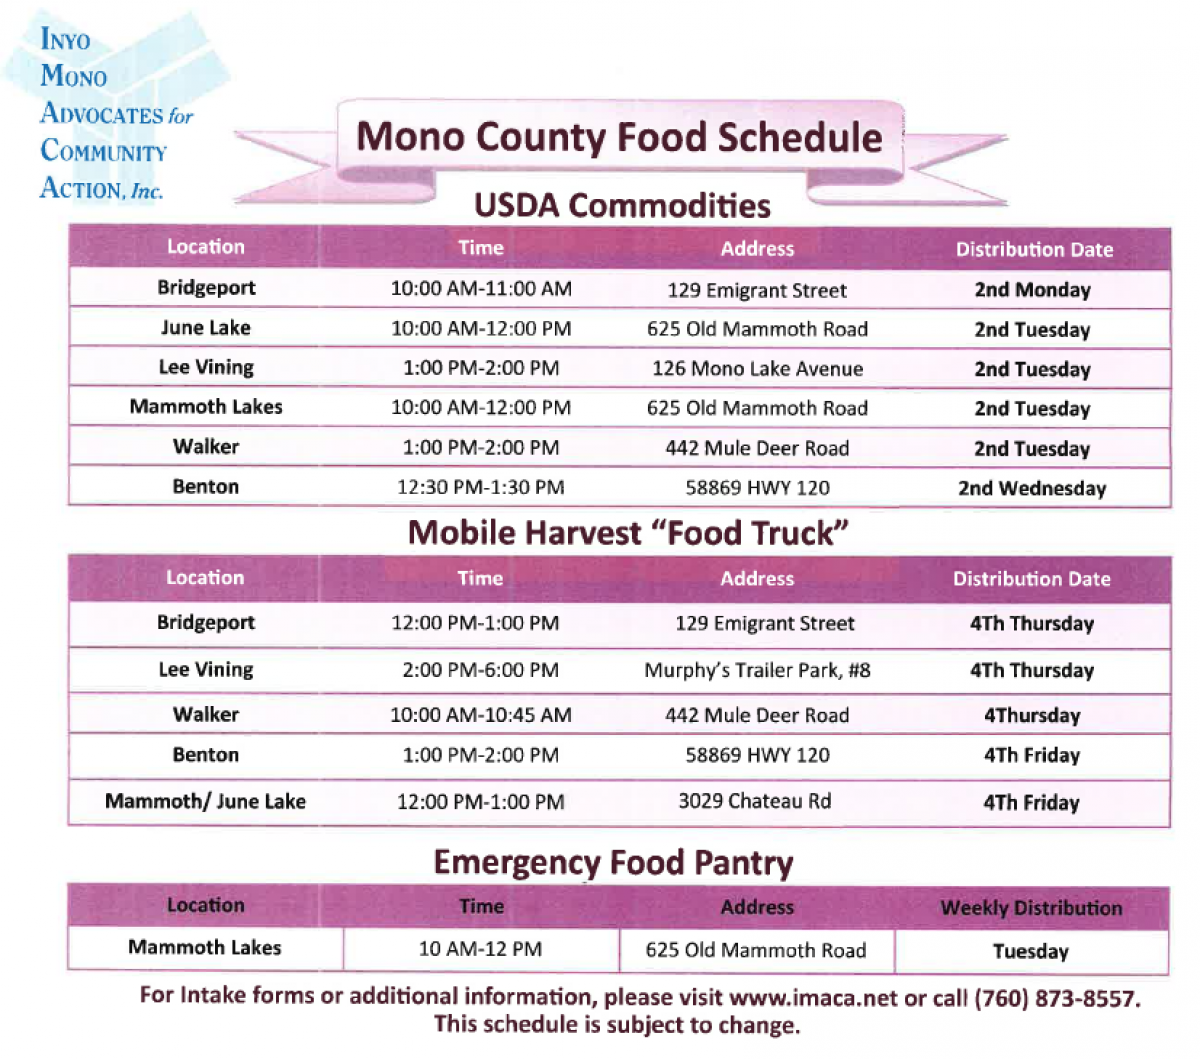 IMACA Food Distribution Calendar